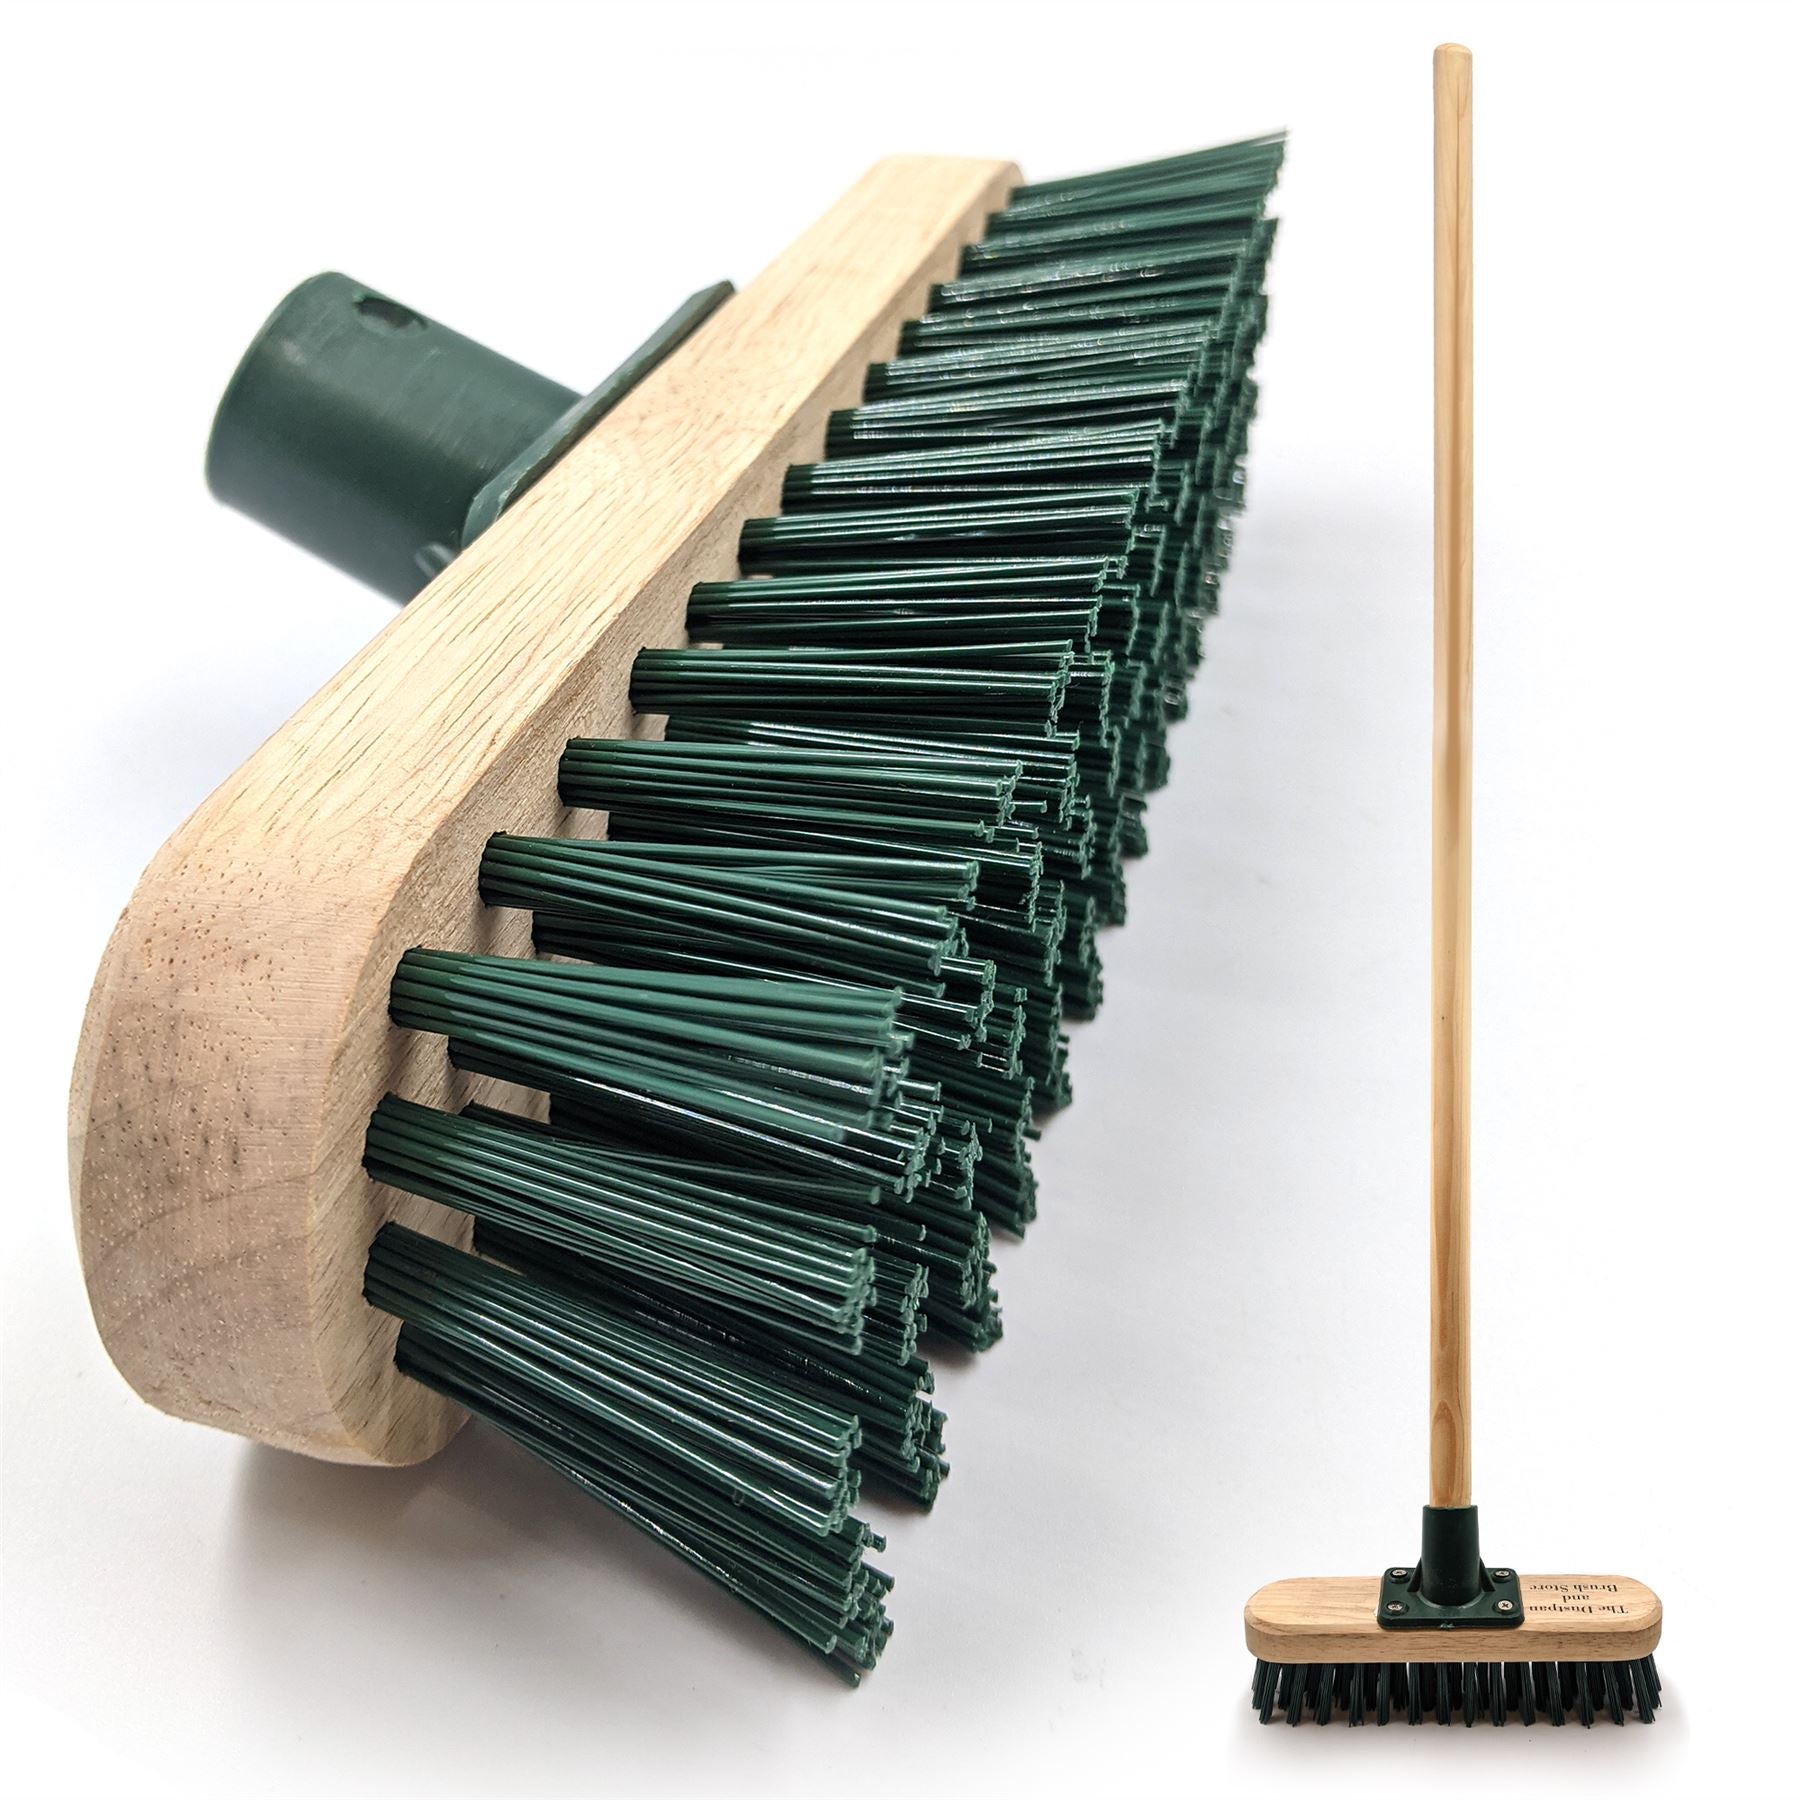 Standard Deck Scrub Brush - 10